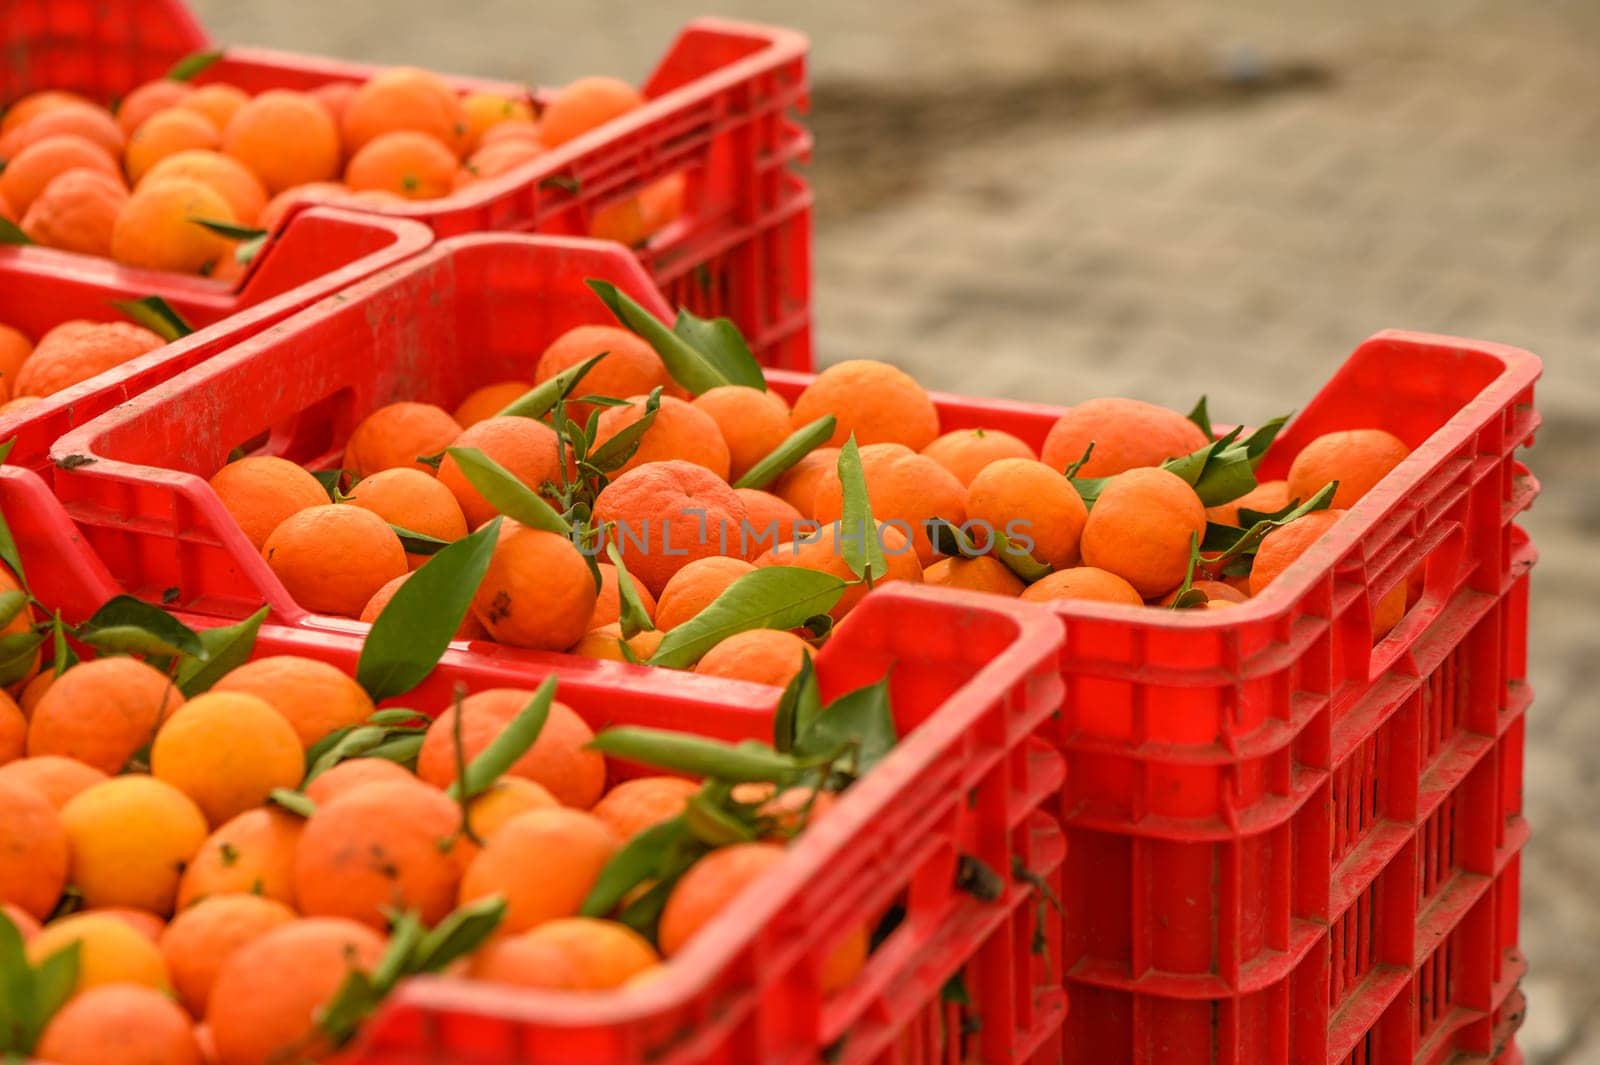 juicy fresh tangerines in boxes for sale in Cyprus in winter 12